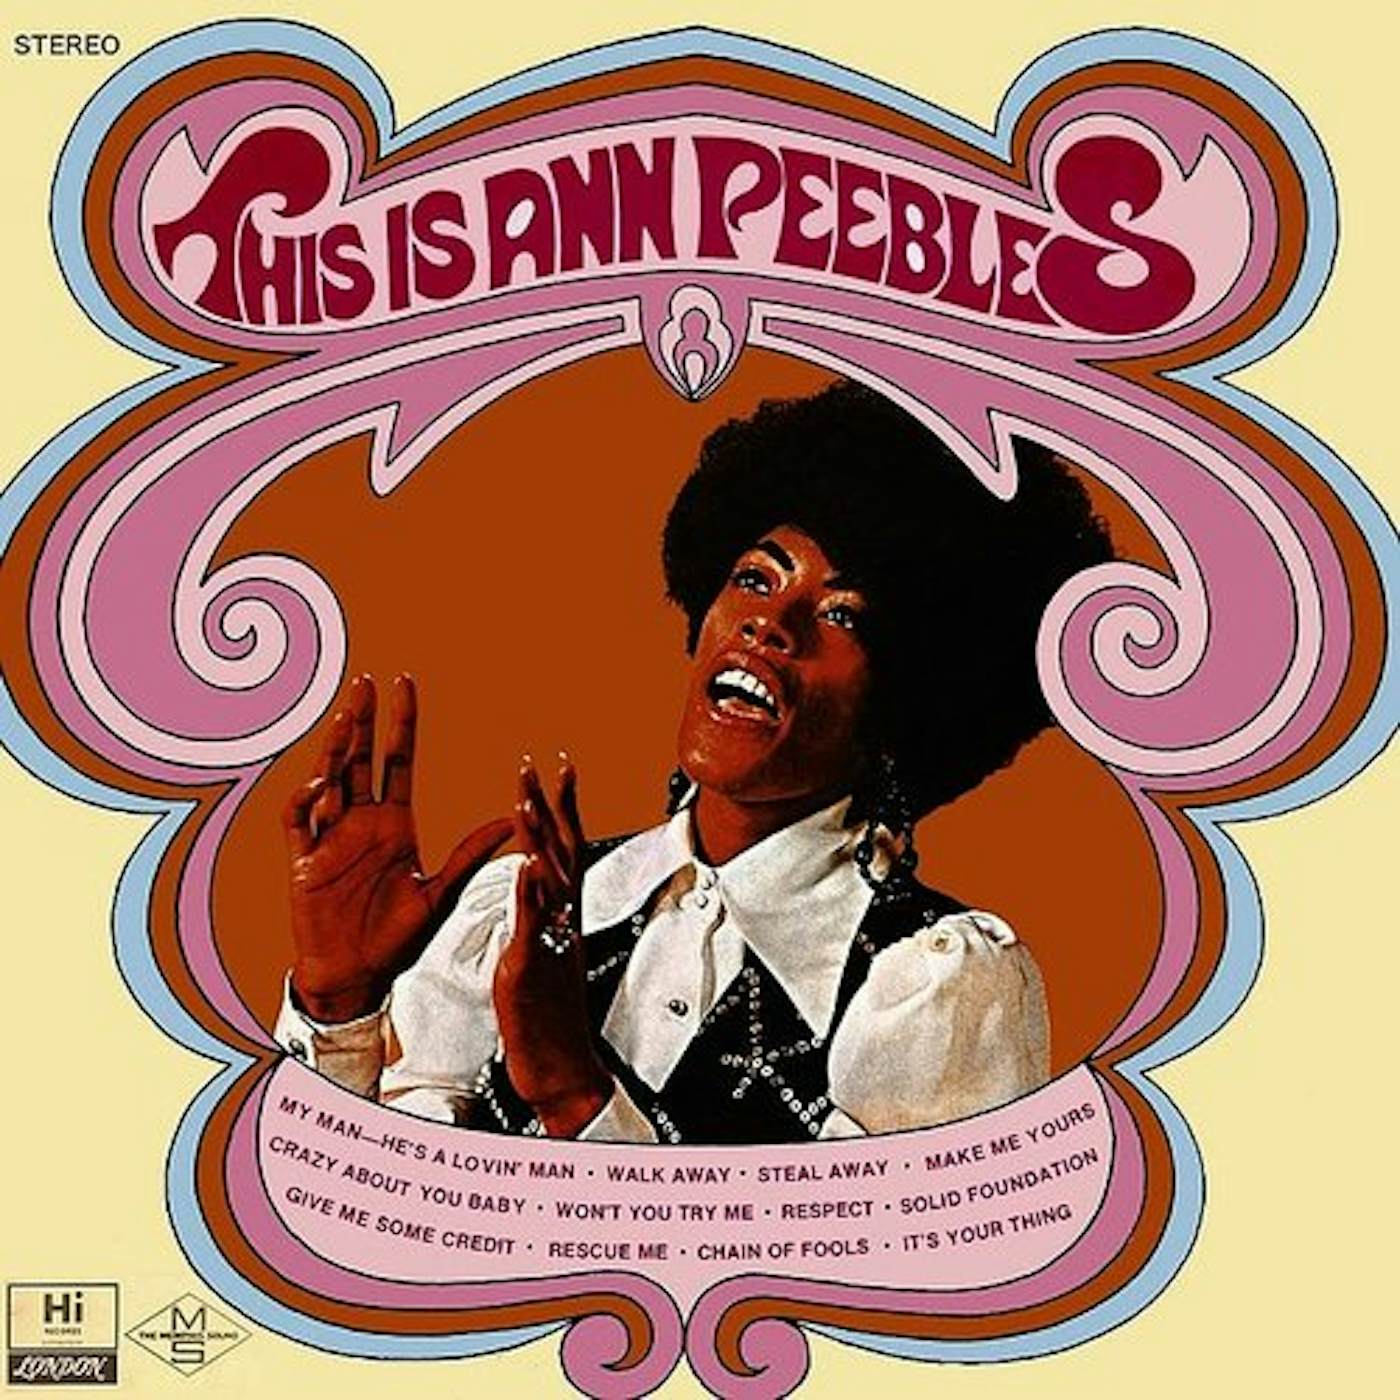 This Is Ann Peebles (Purple) Vinyl Record